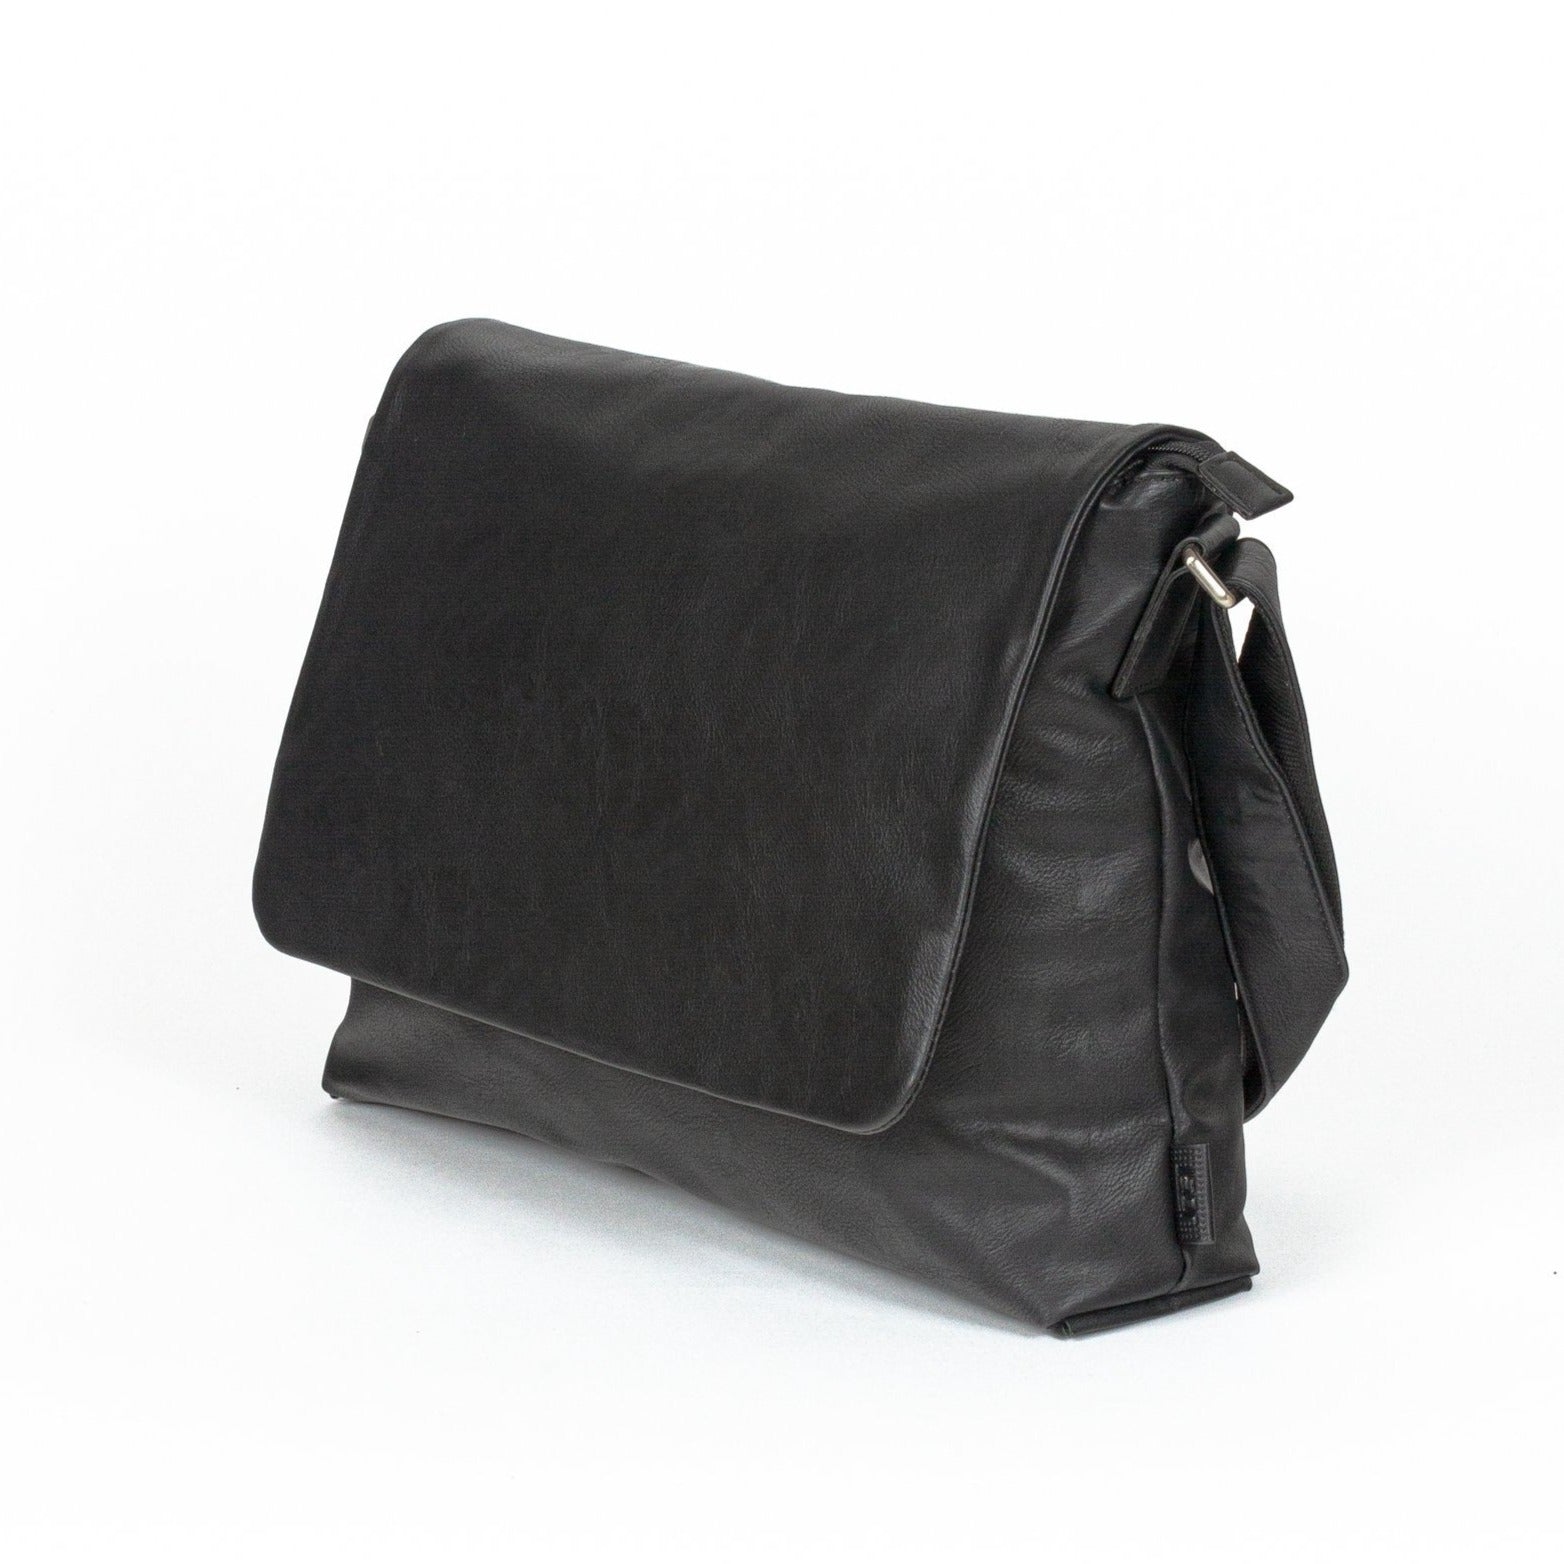 BEON.COM.AU Merritt Messenger Bag by Jost in black Bags Jost at BEON.COM.AU